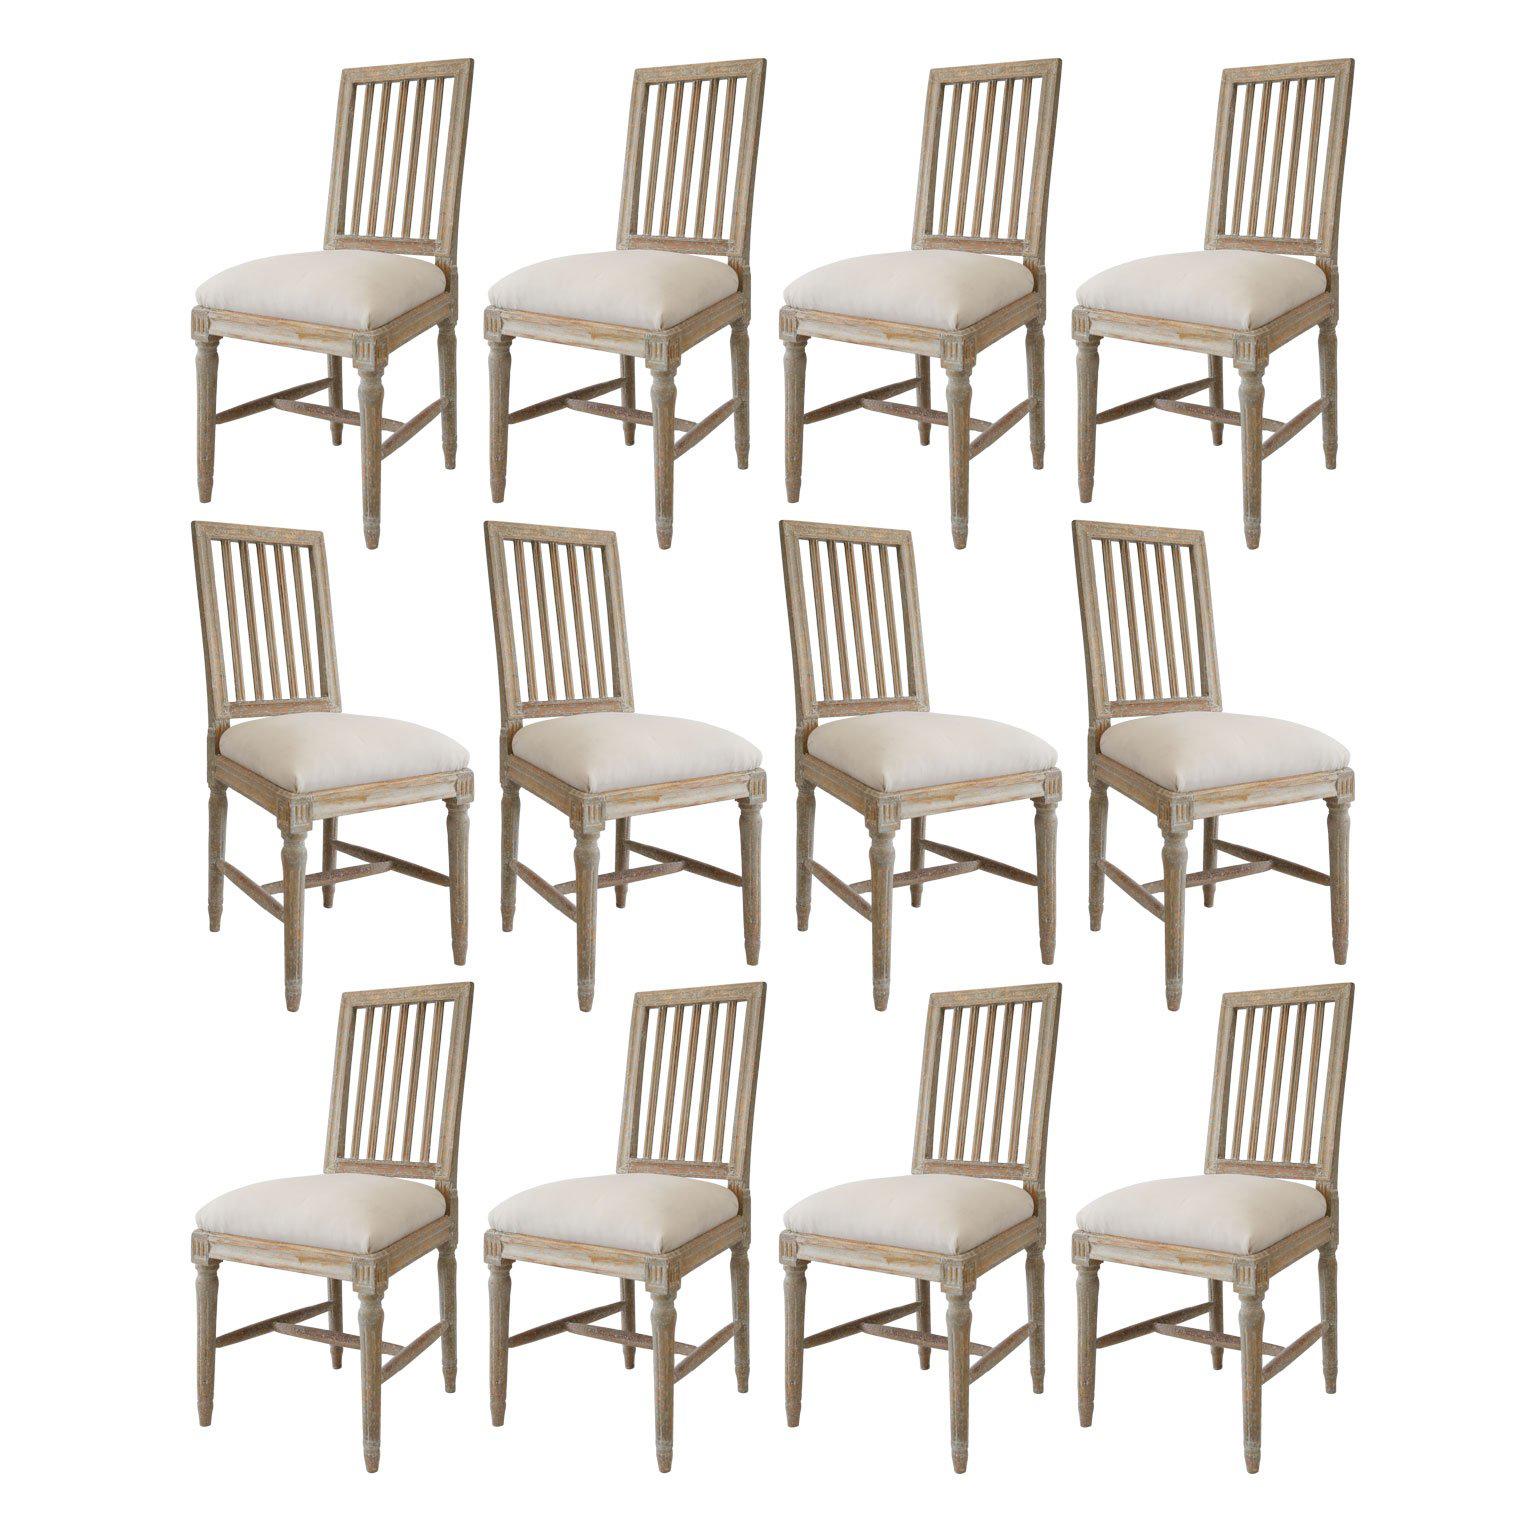 12 Swedish Dining Chairs